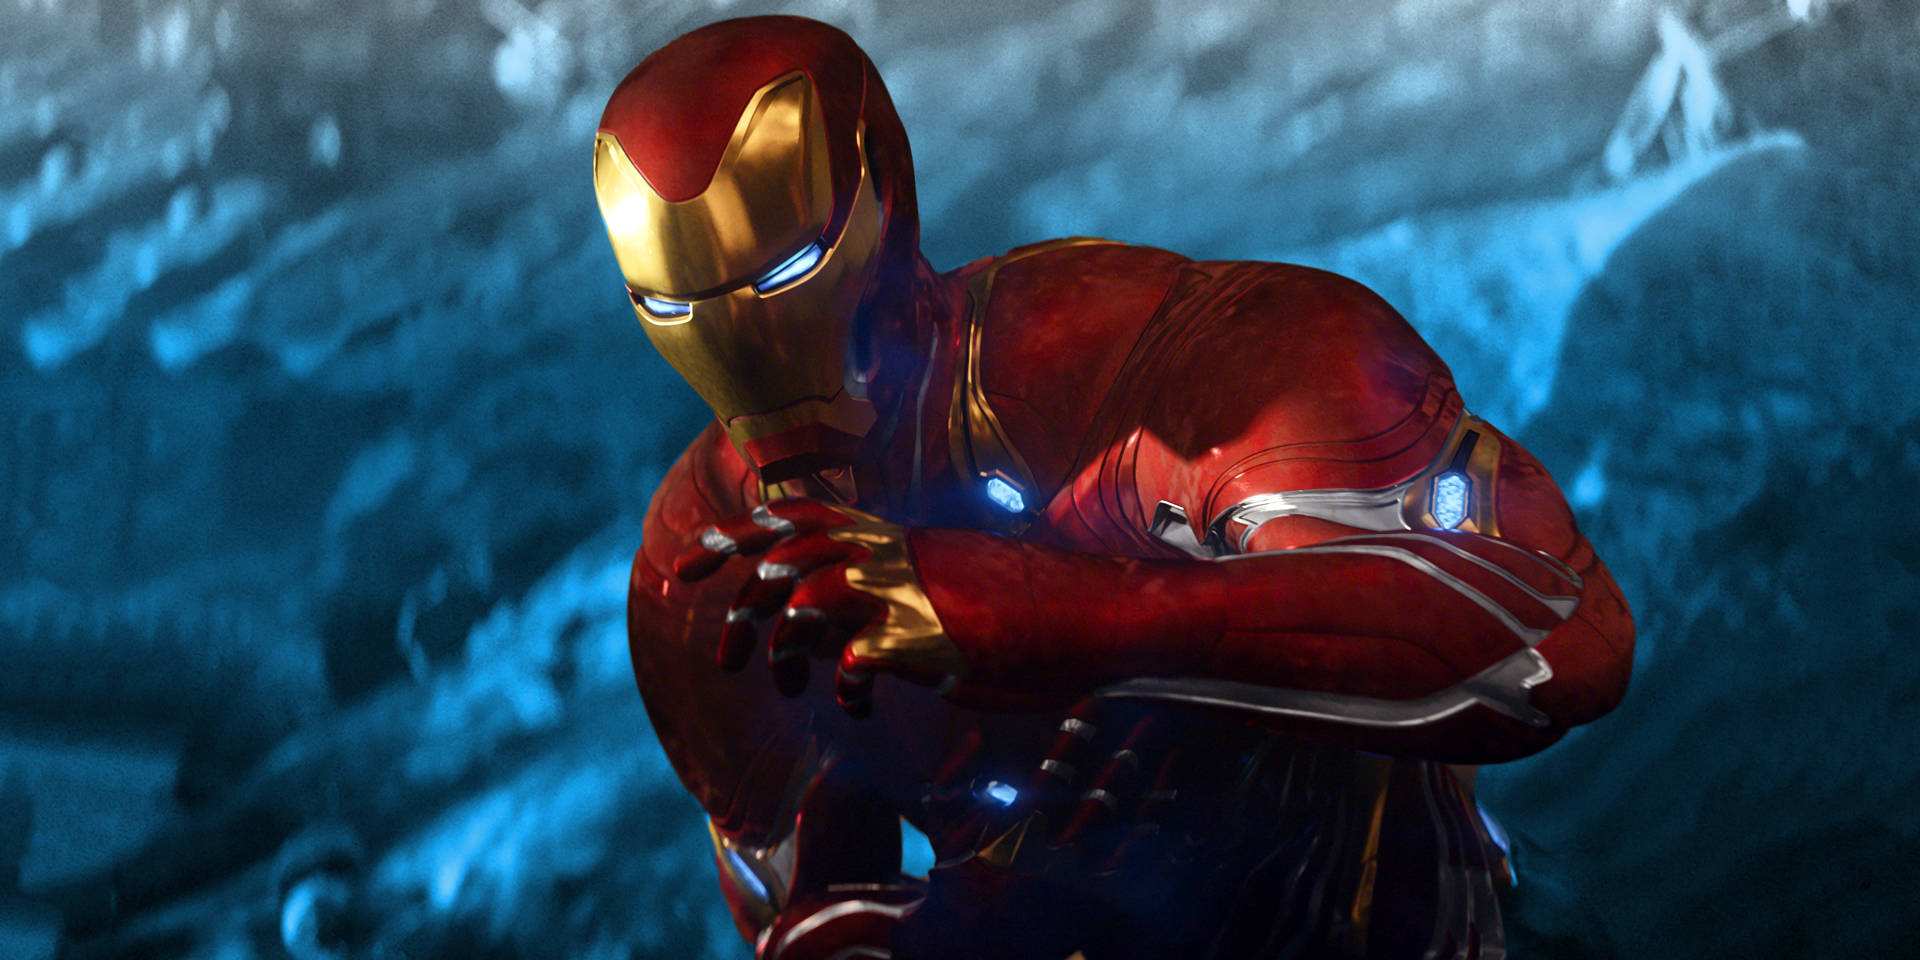 Download Superhero Iron Man On Avengers: Infinity War Wallpaper | Wallpapers .com